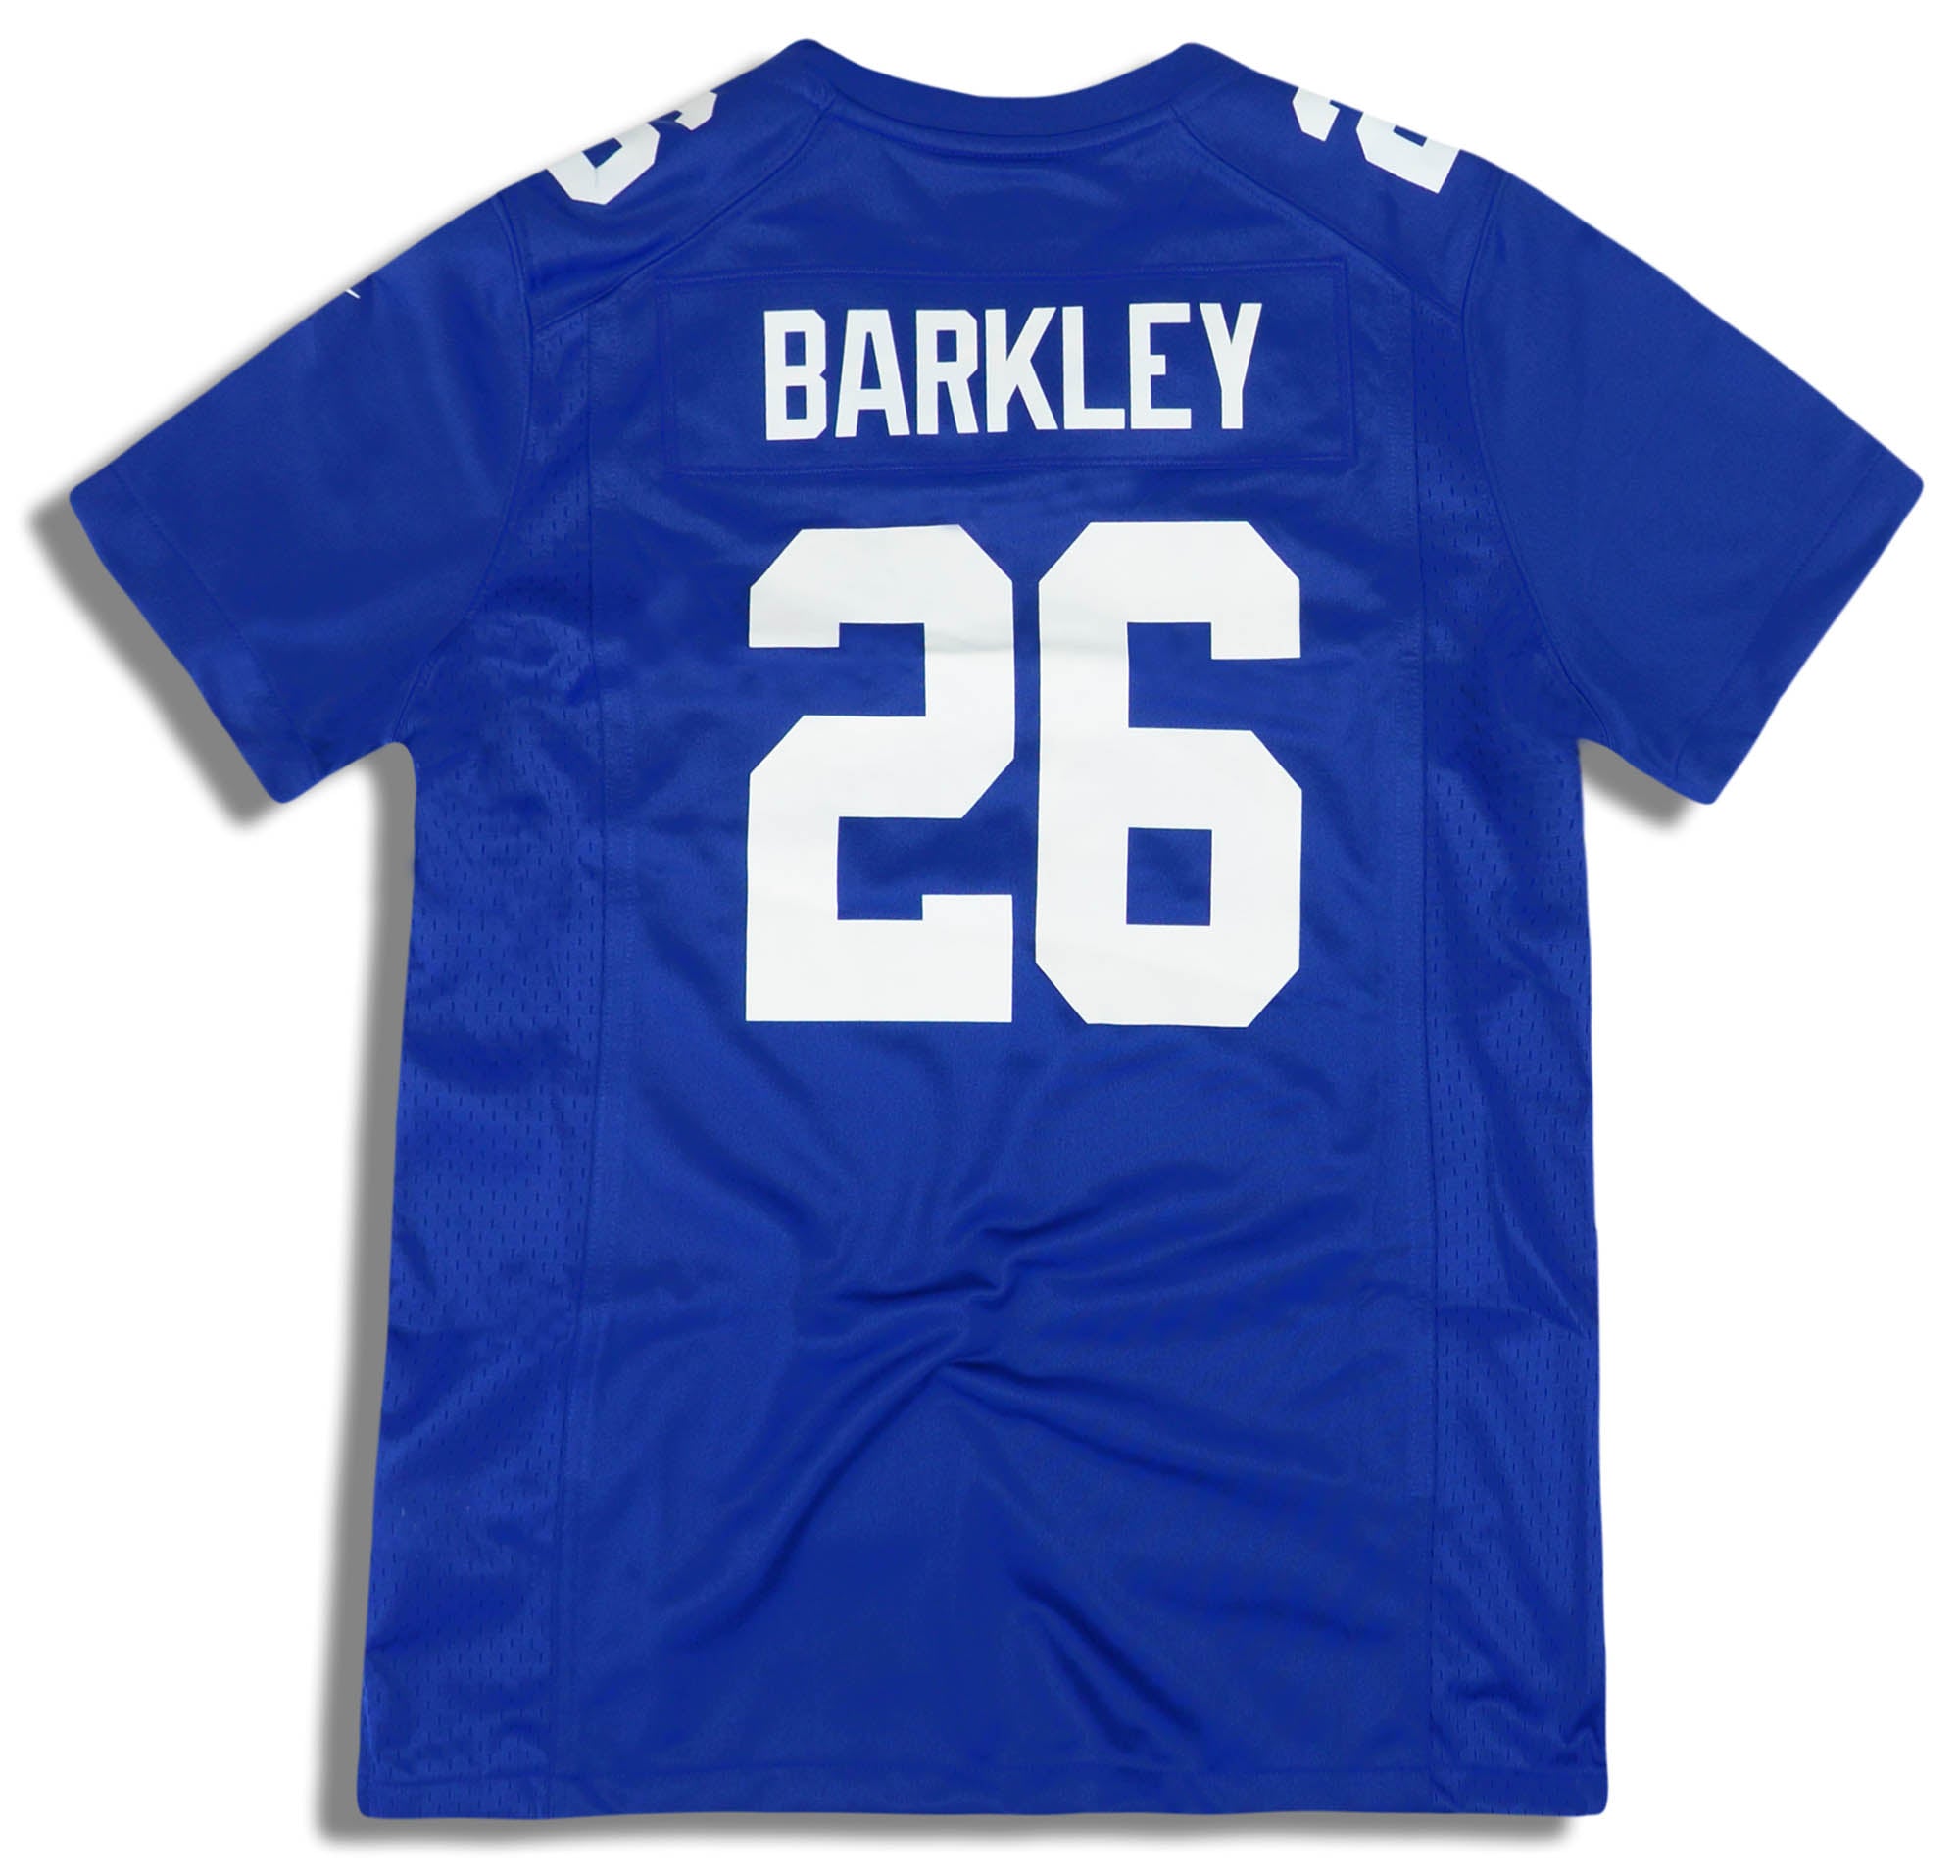 Nike Women's New York Giants Saquon Barkley #26 White Game Jersey